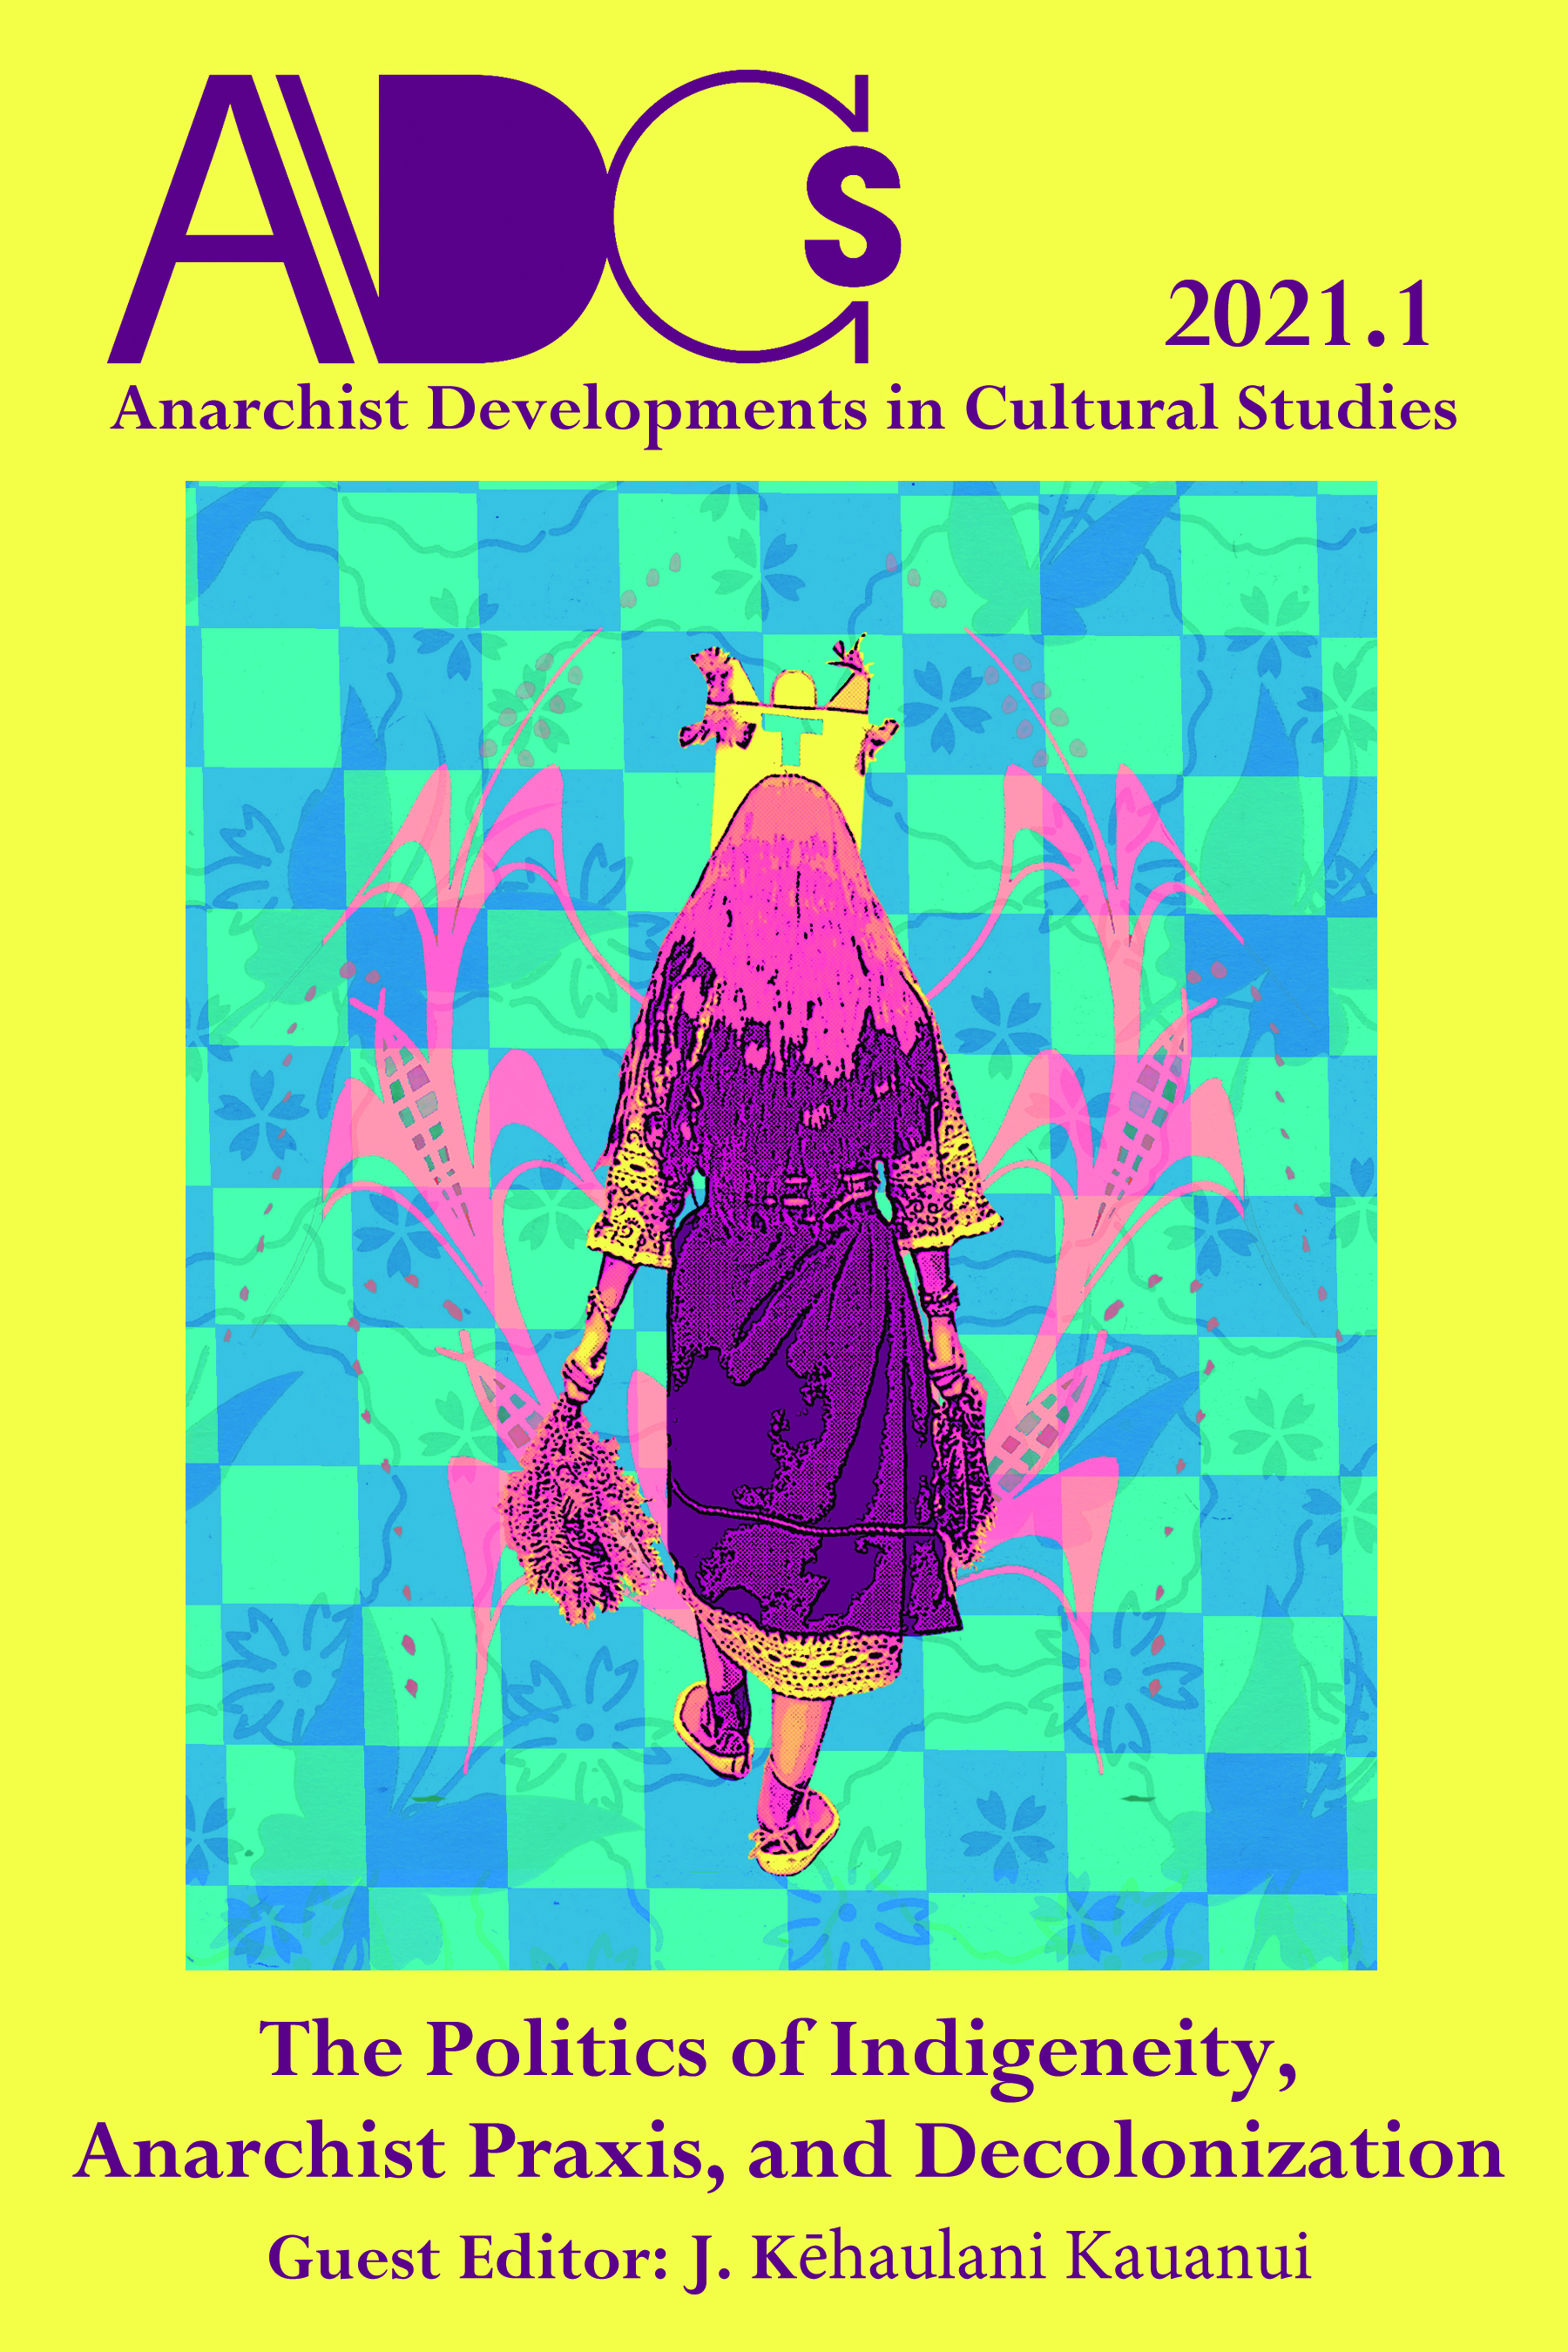 Anarchist Developments in Cultural Studies, 2021.1 The Politics of Indigeneity, Anarchist Praxis, and Decolonization J. Kehaulani Kauanui